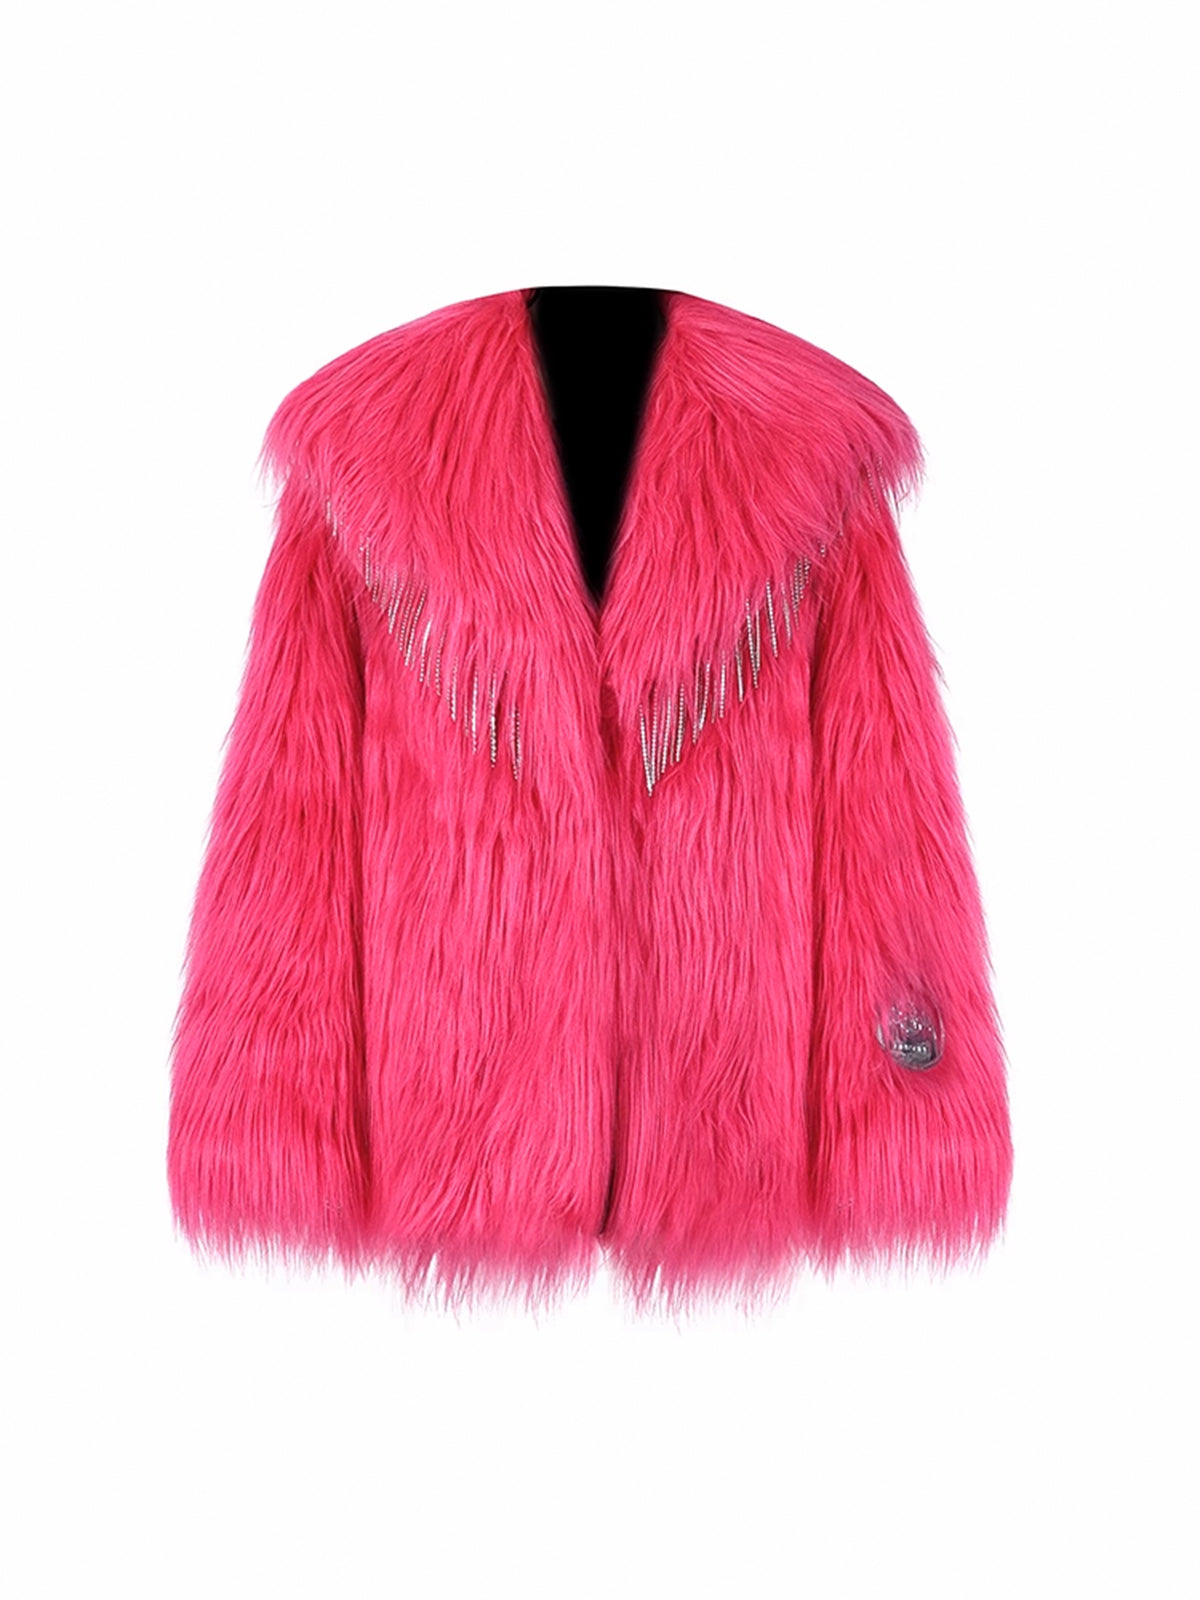 Barbie styled fur coat